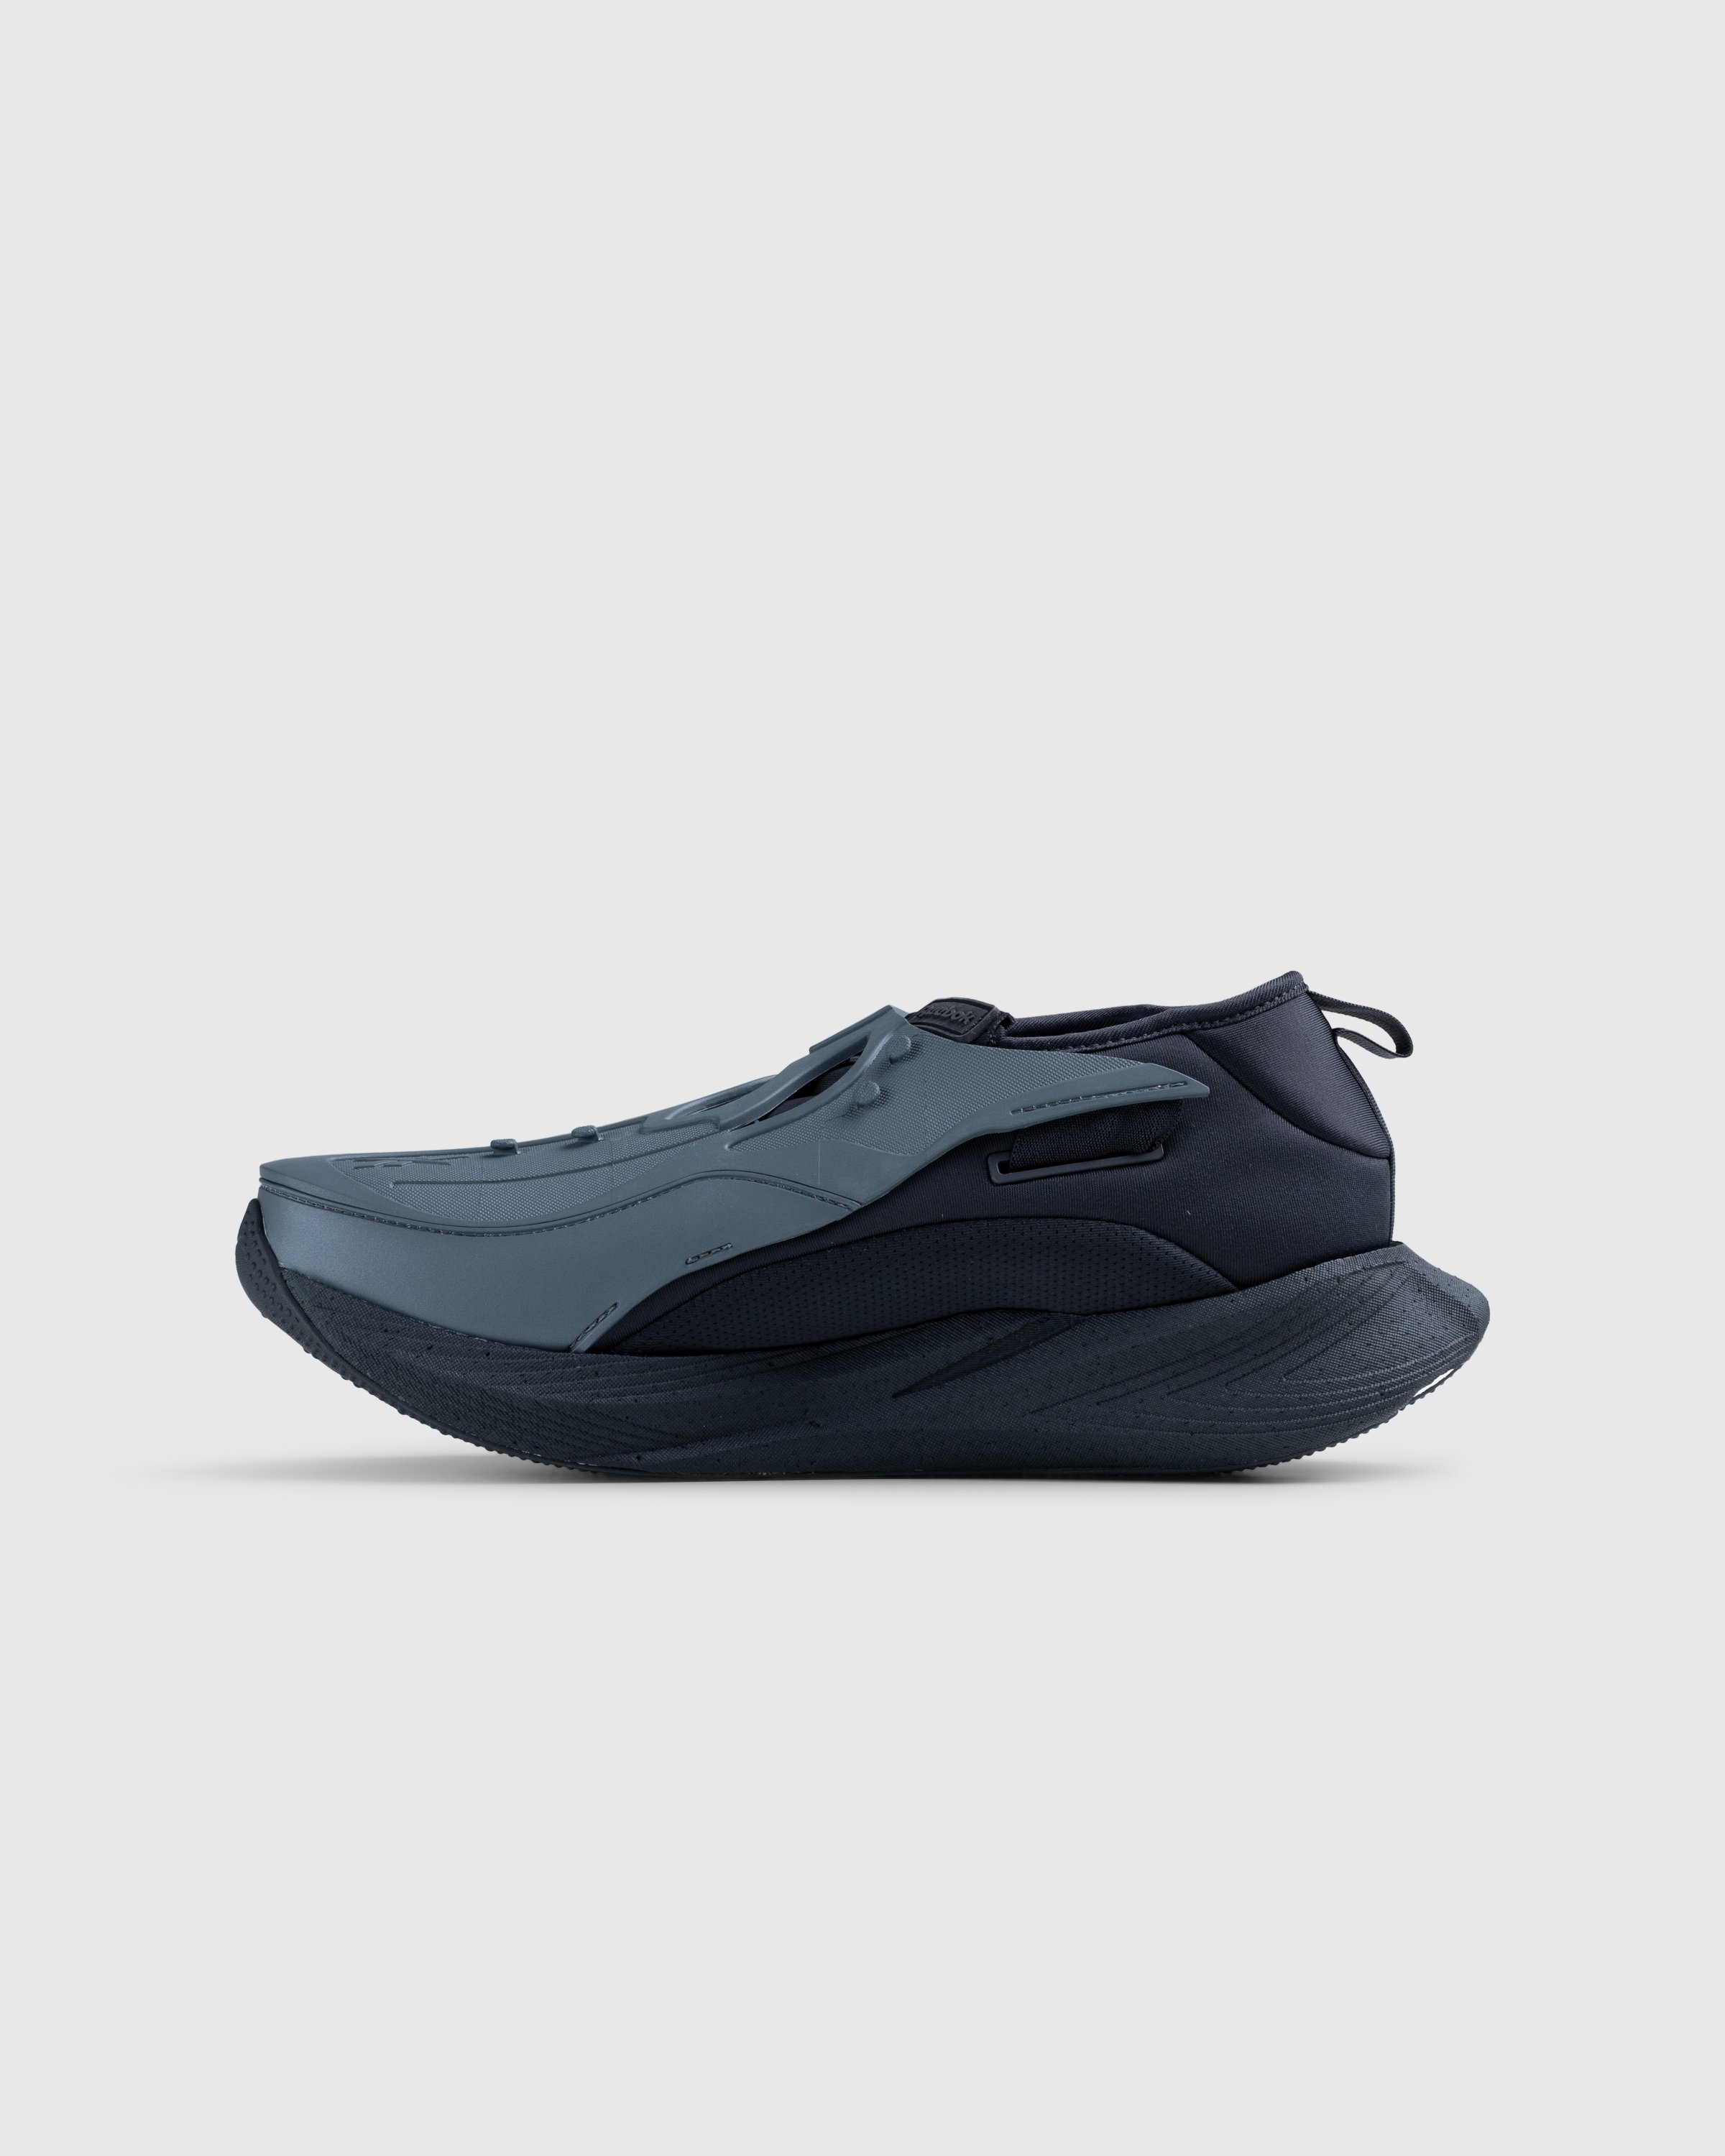 Reebok - FLOATRIDE BLACK/SILVER - Footwear - Black - Image 2